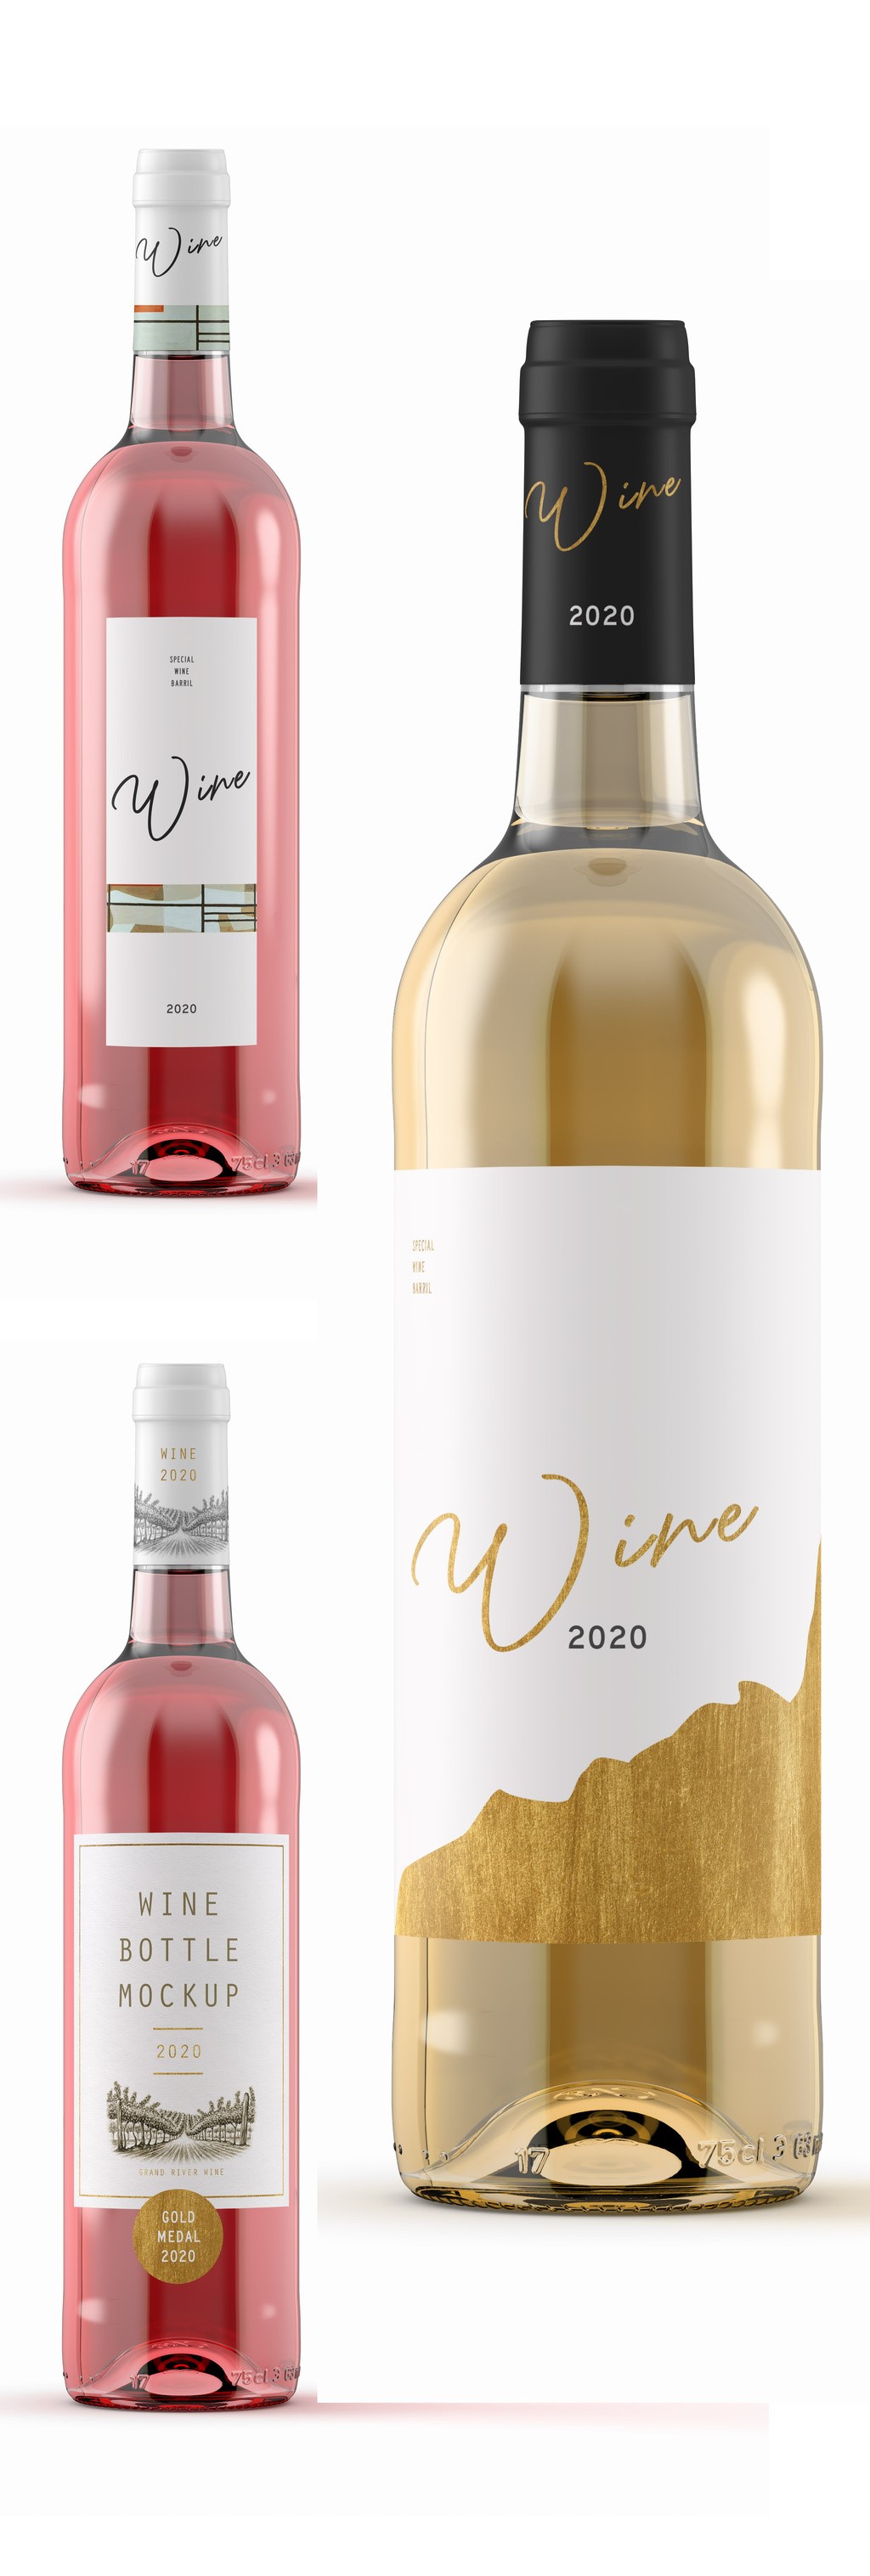 rose-or-white-wine-bottle-mockup-psd